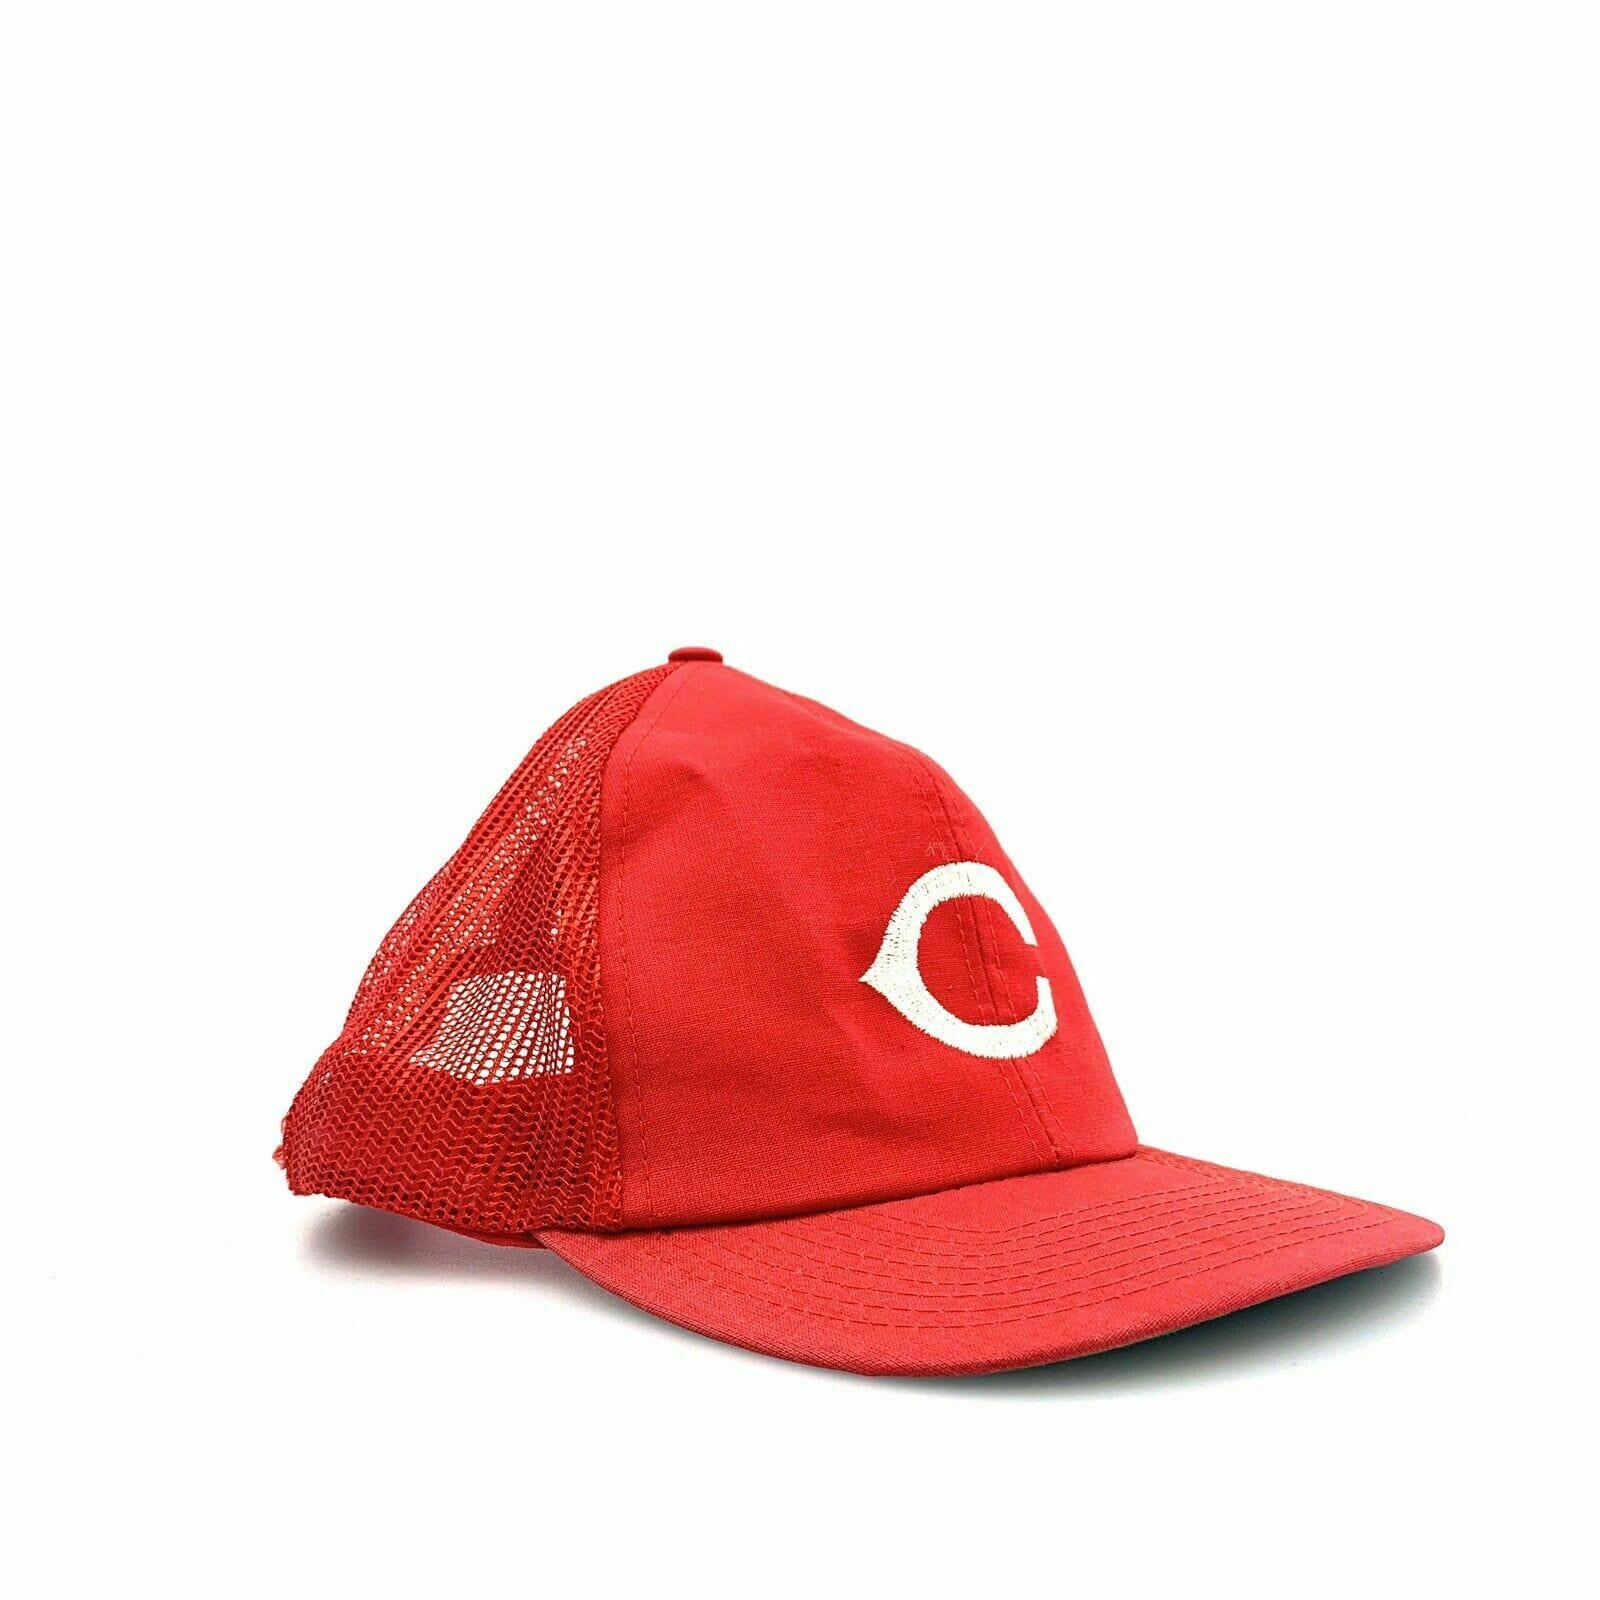 Stylish Vintage Twins Enterprises Cincinnati Reds Snapback Trucker Hat -  Size M/L, Red